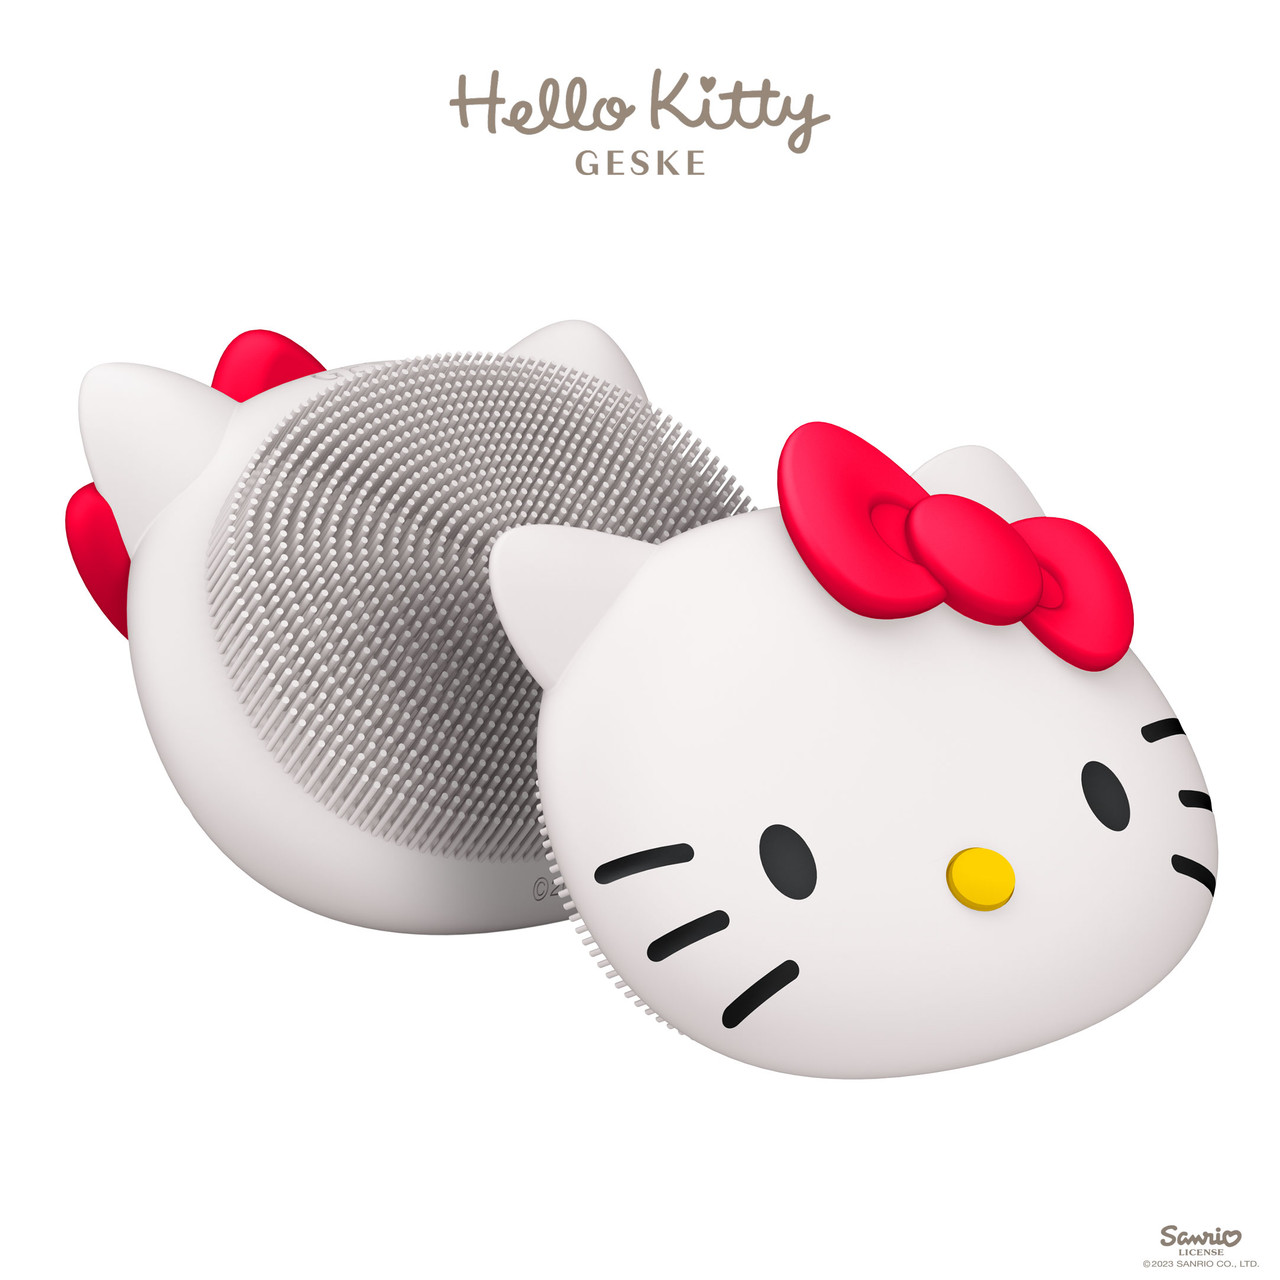 GESKE Facial Brush 3 in 1 - Hello Kitty